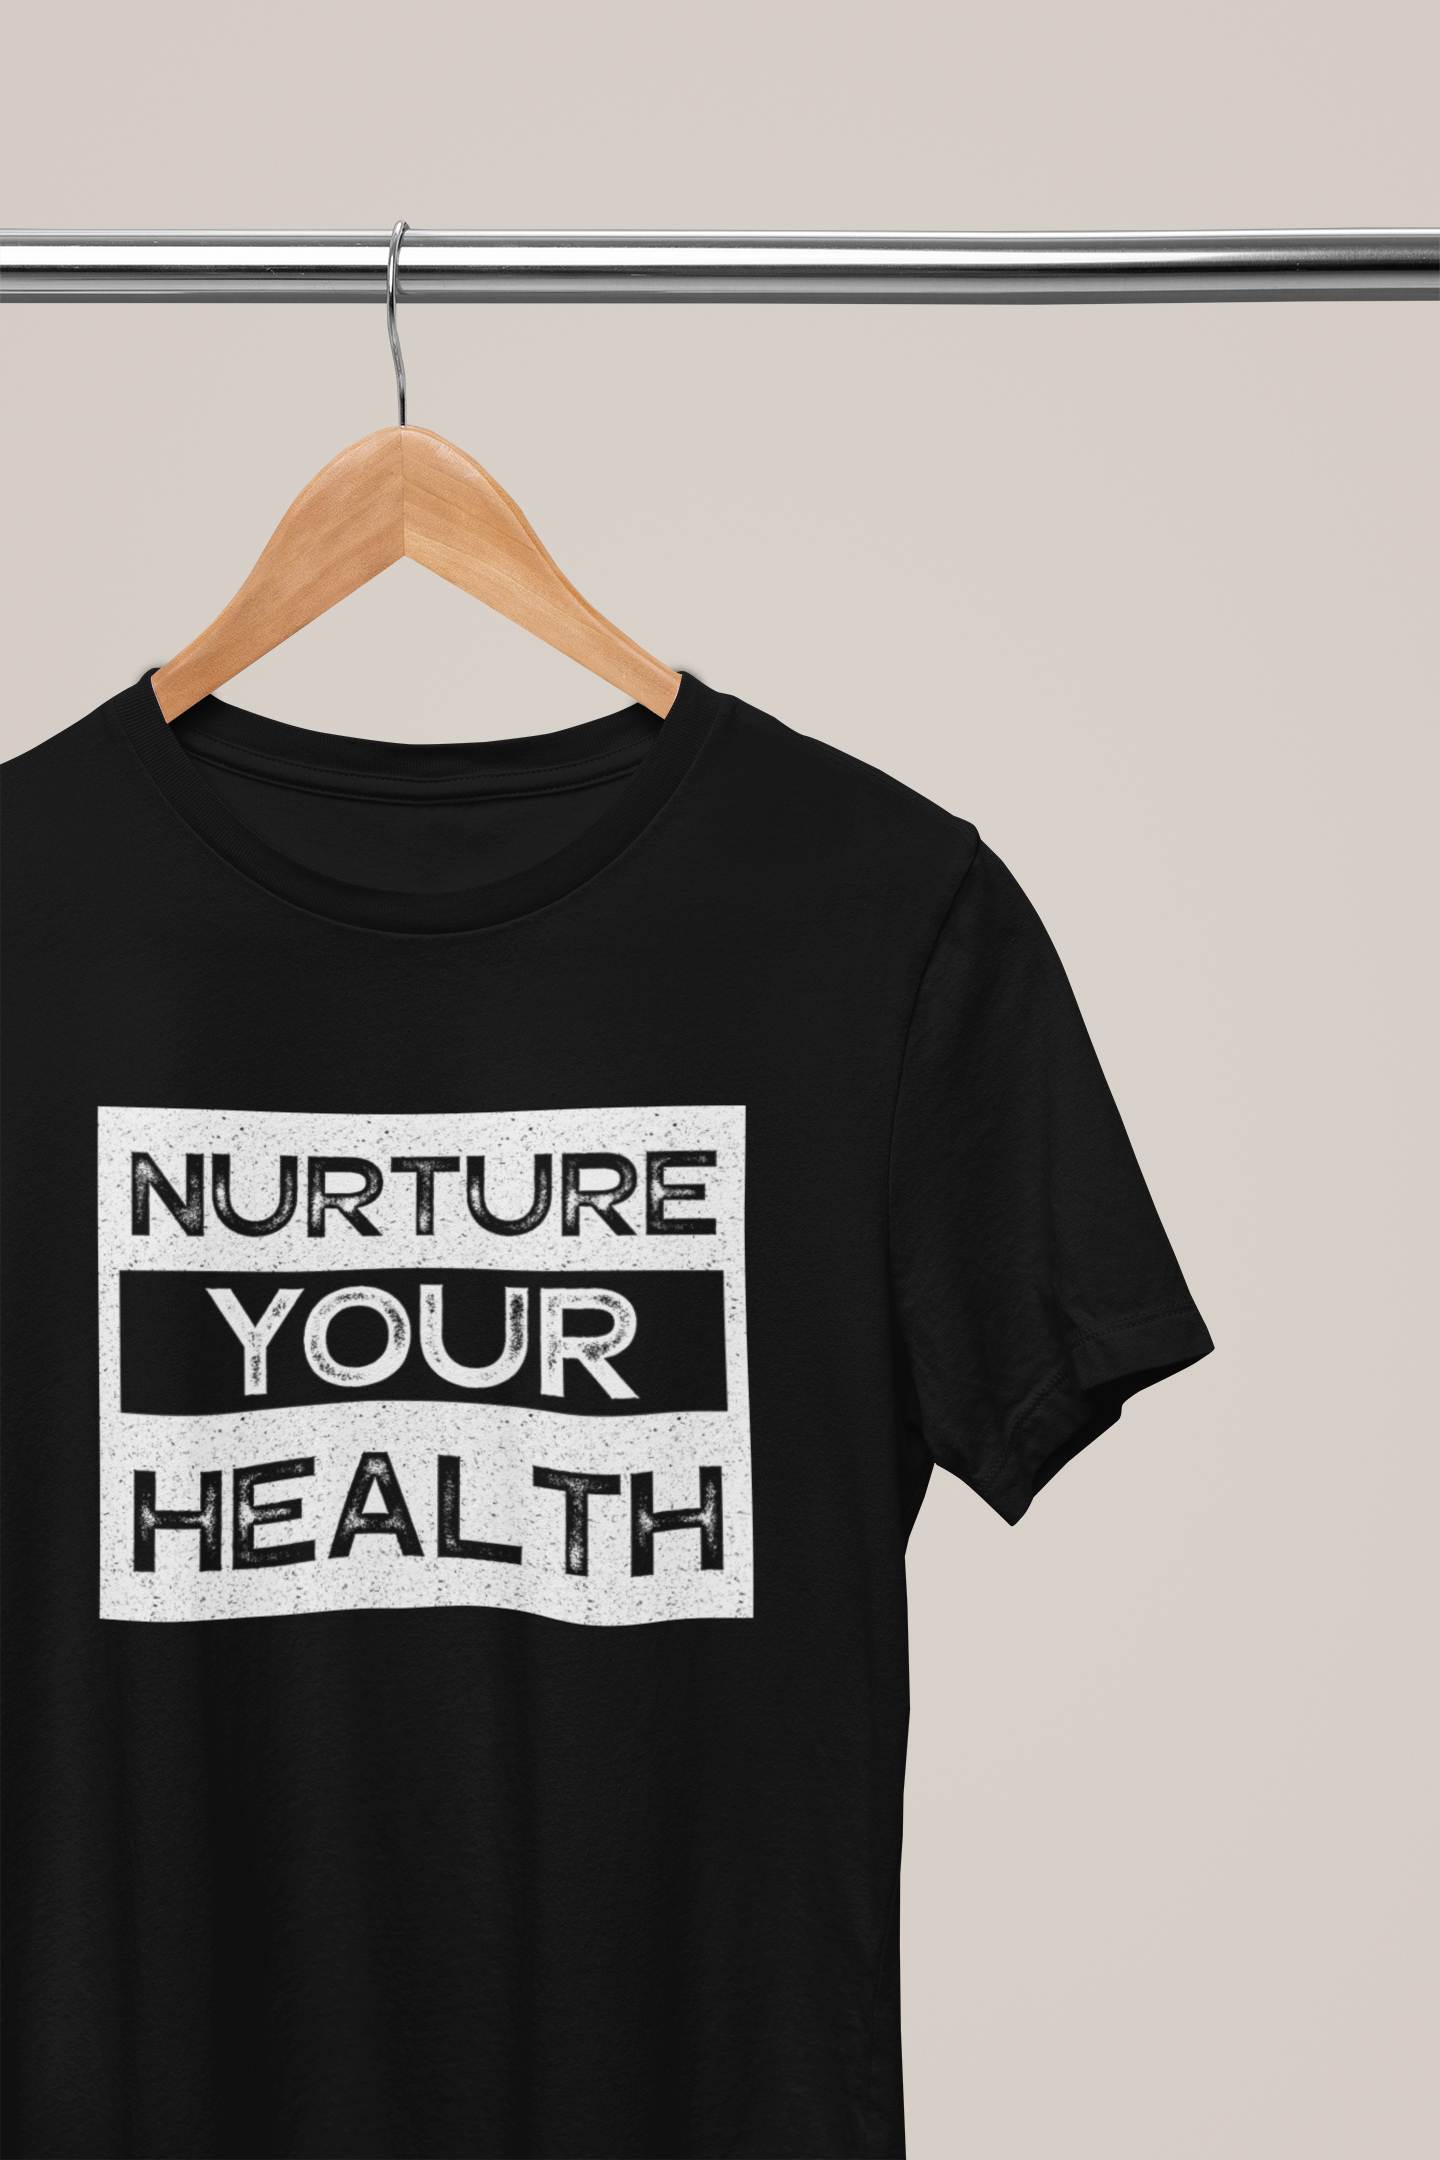 Nurture Your Health, Hoodies, Sweatshirts, Tees, and Mugs